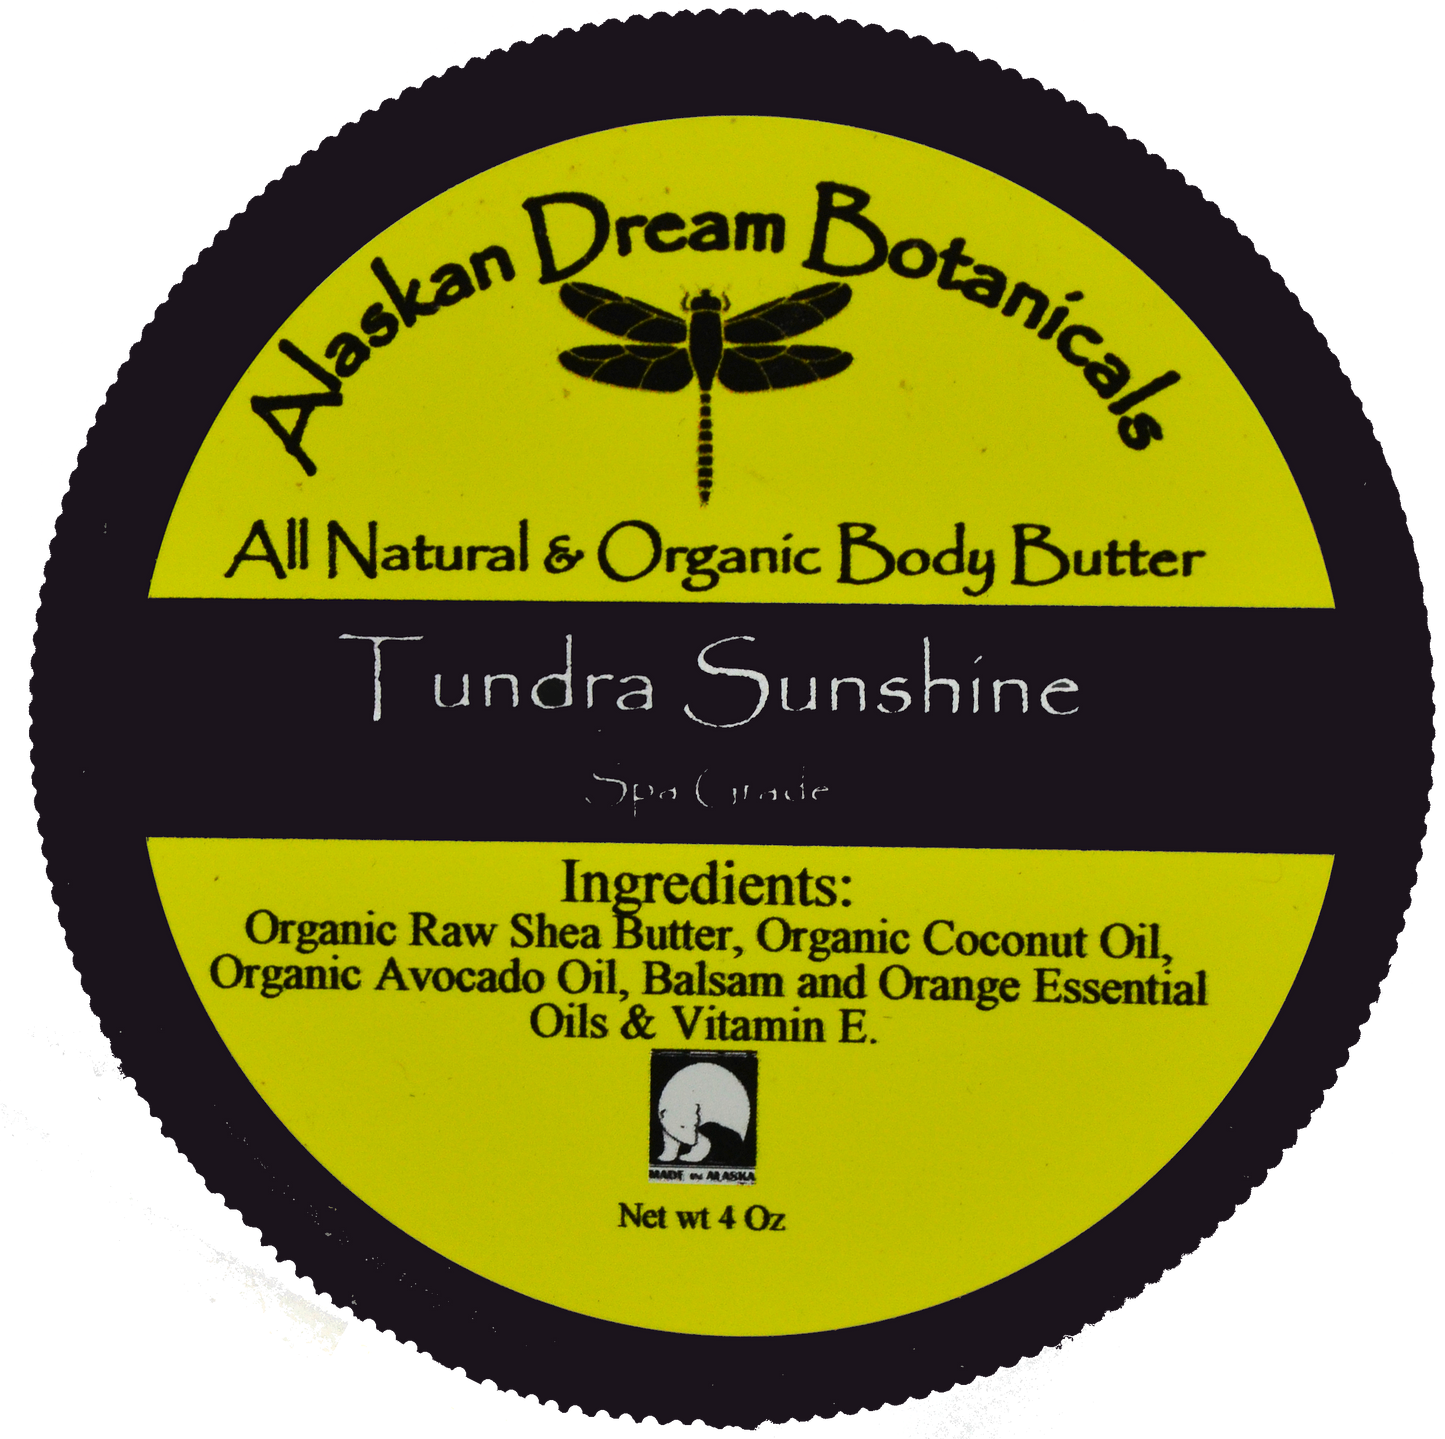 Tundra Sunshine Spa Grade Body Butter - Alaskan Dream Botanicals